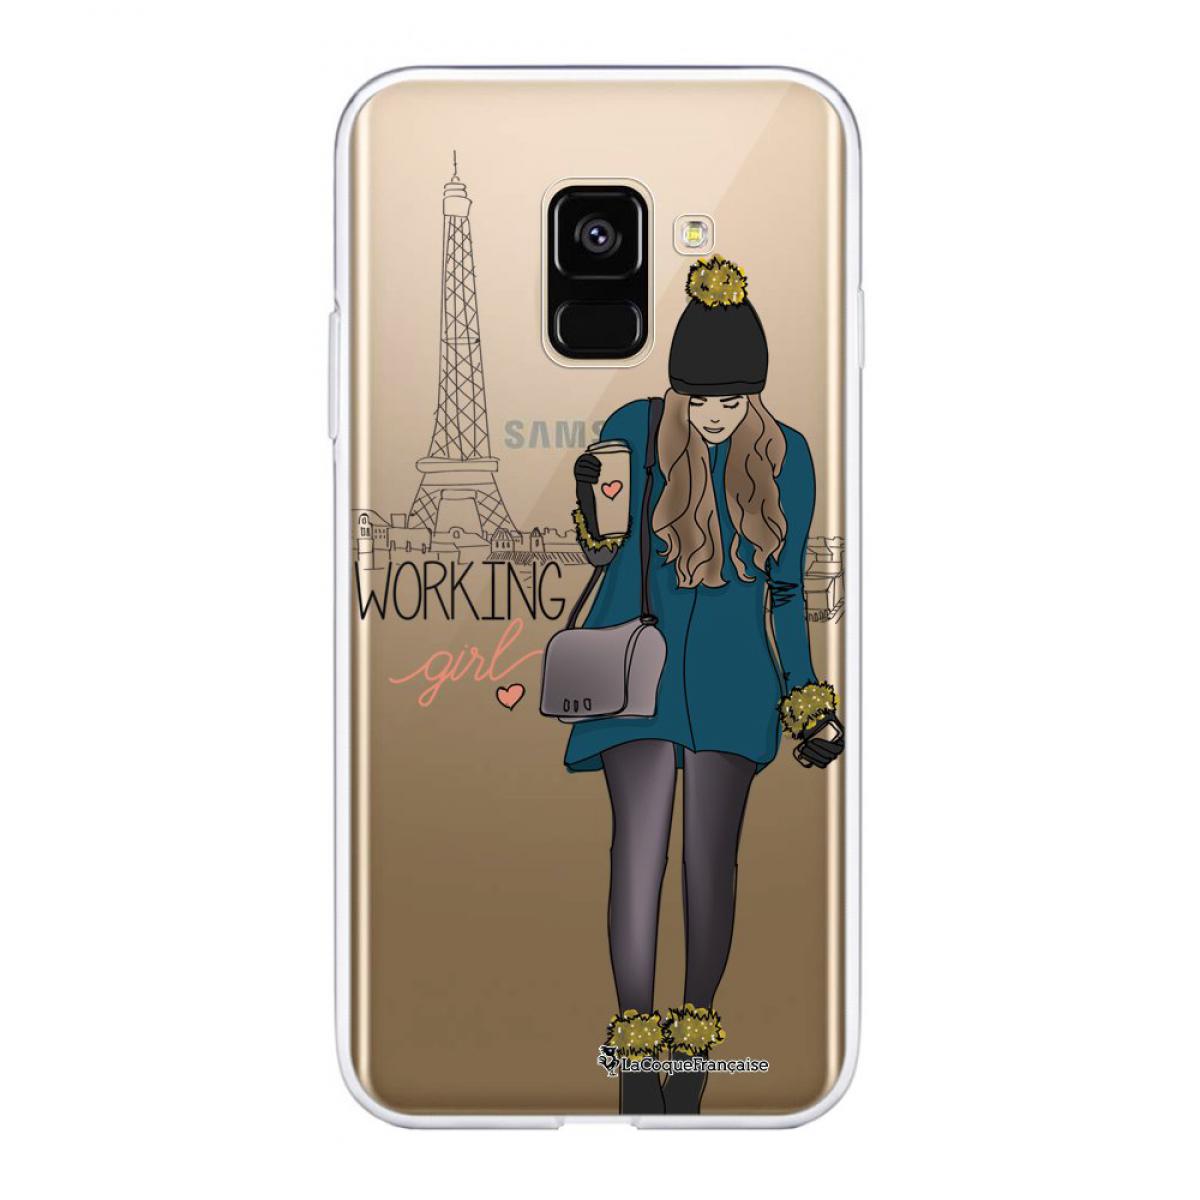 La Coque Francaise - Coque Samsung Galaxy A8 2018 souple Working girl Motif Ecriture Tendance La Coque Francaise - Coque, étui smartphone